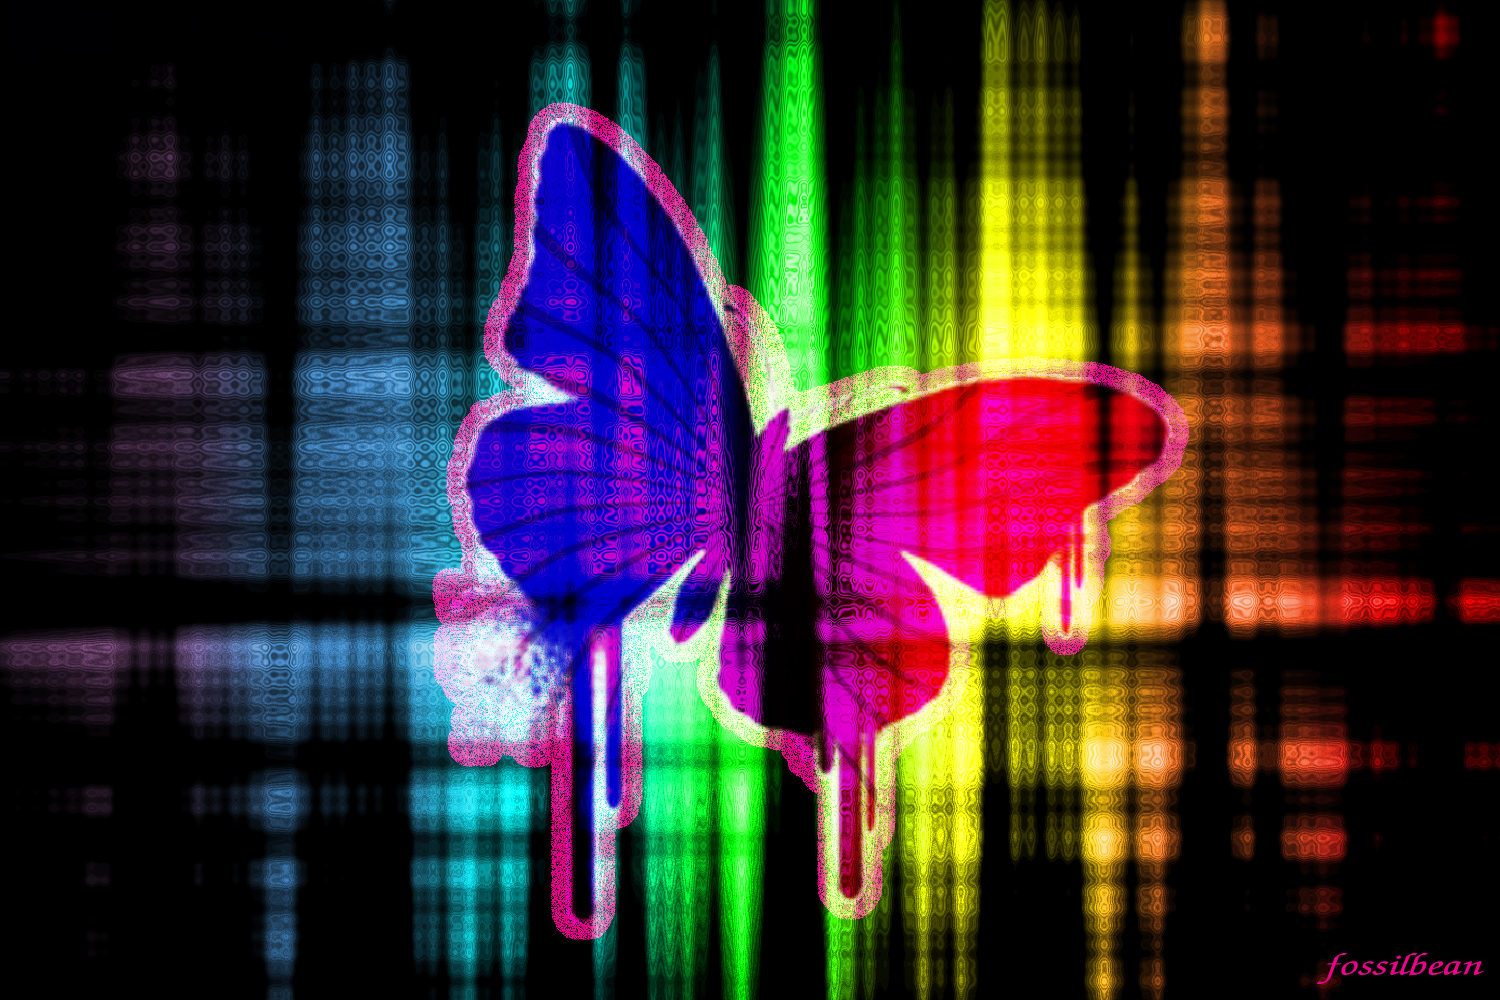 Colorful Butterflies Wallpaper